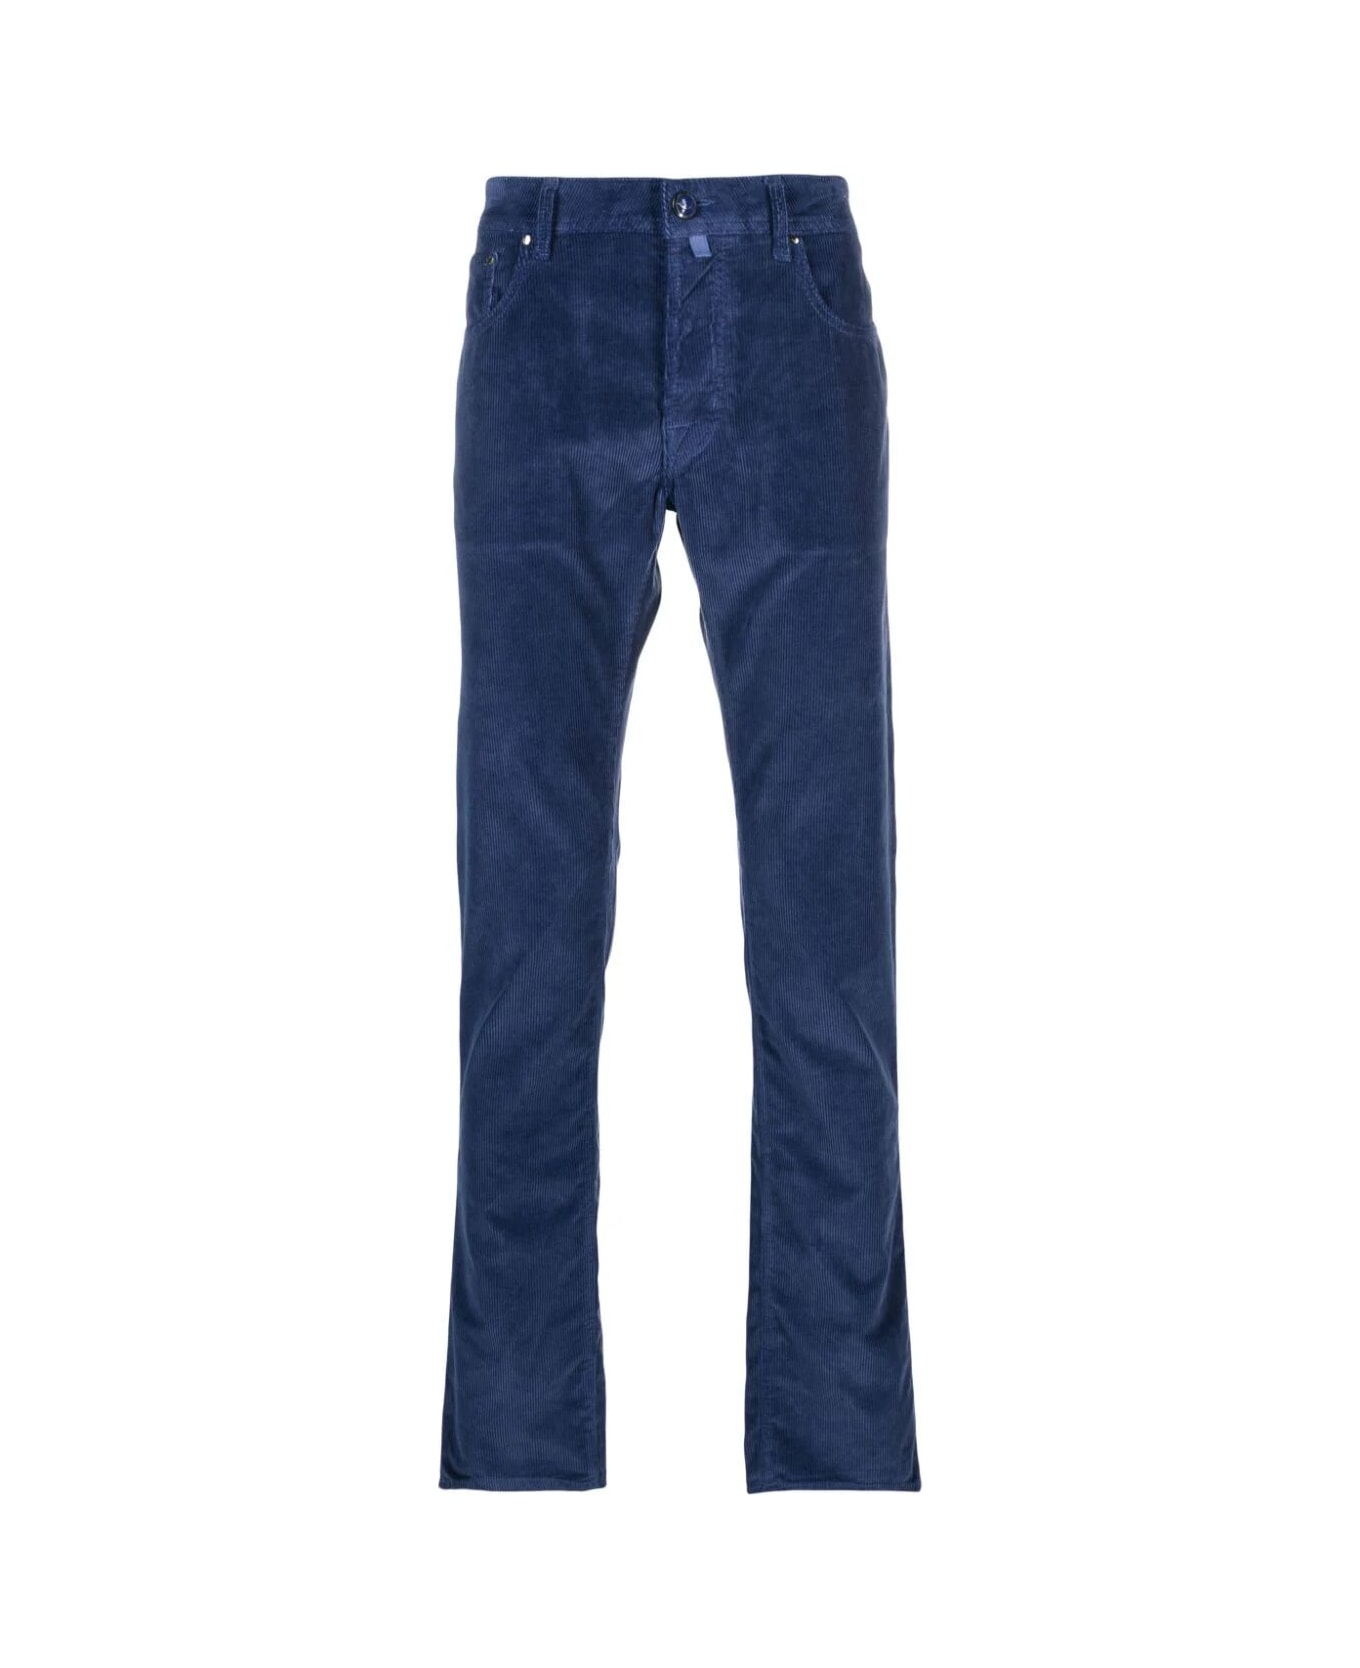 Jacob Cohen Bard Slim Fit Jeans - China Blue